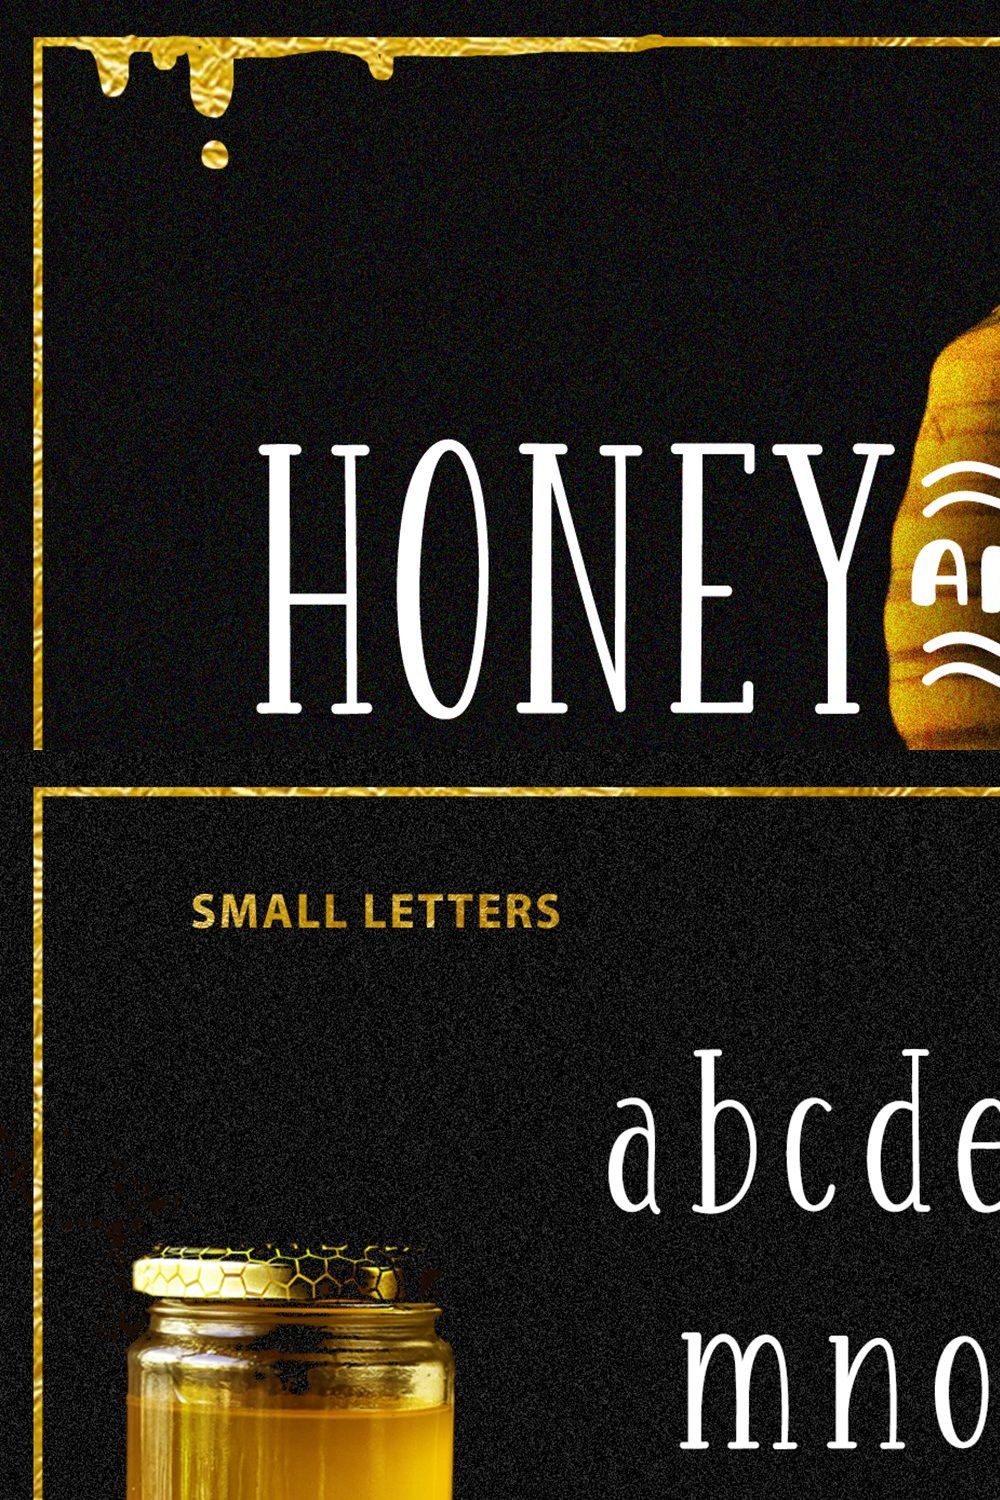 Honey and Jam - Regular pinterest preview image.